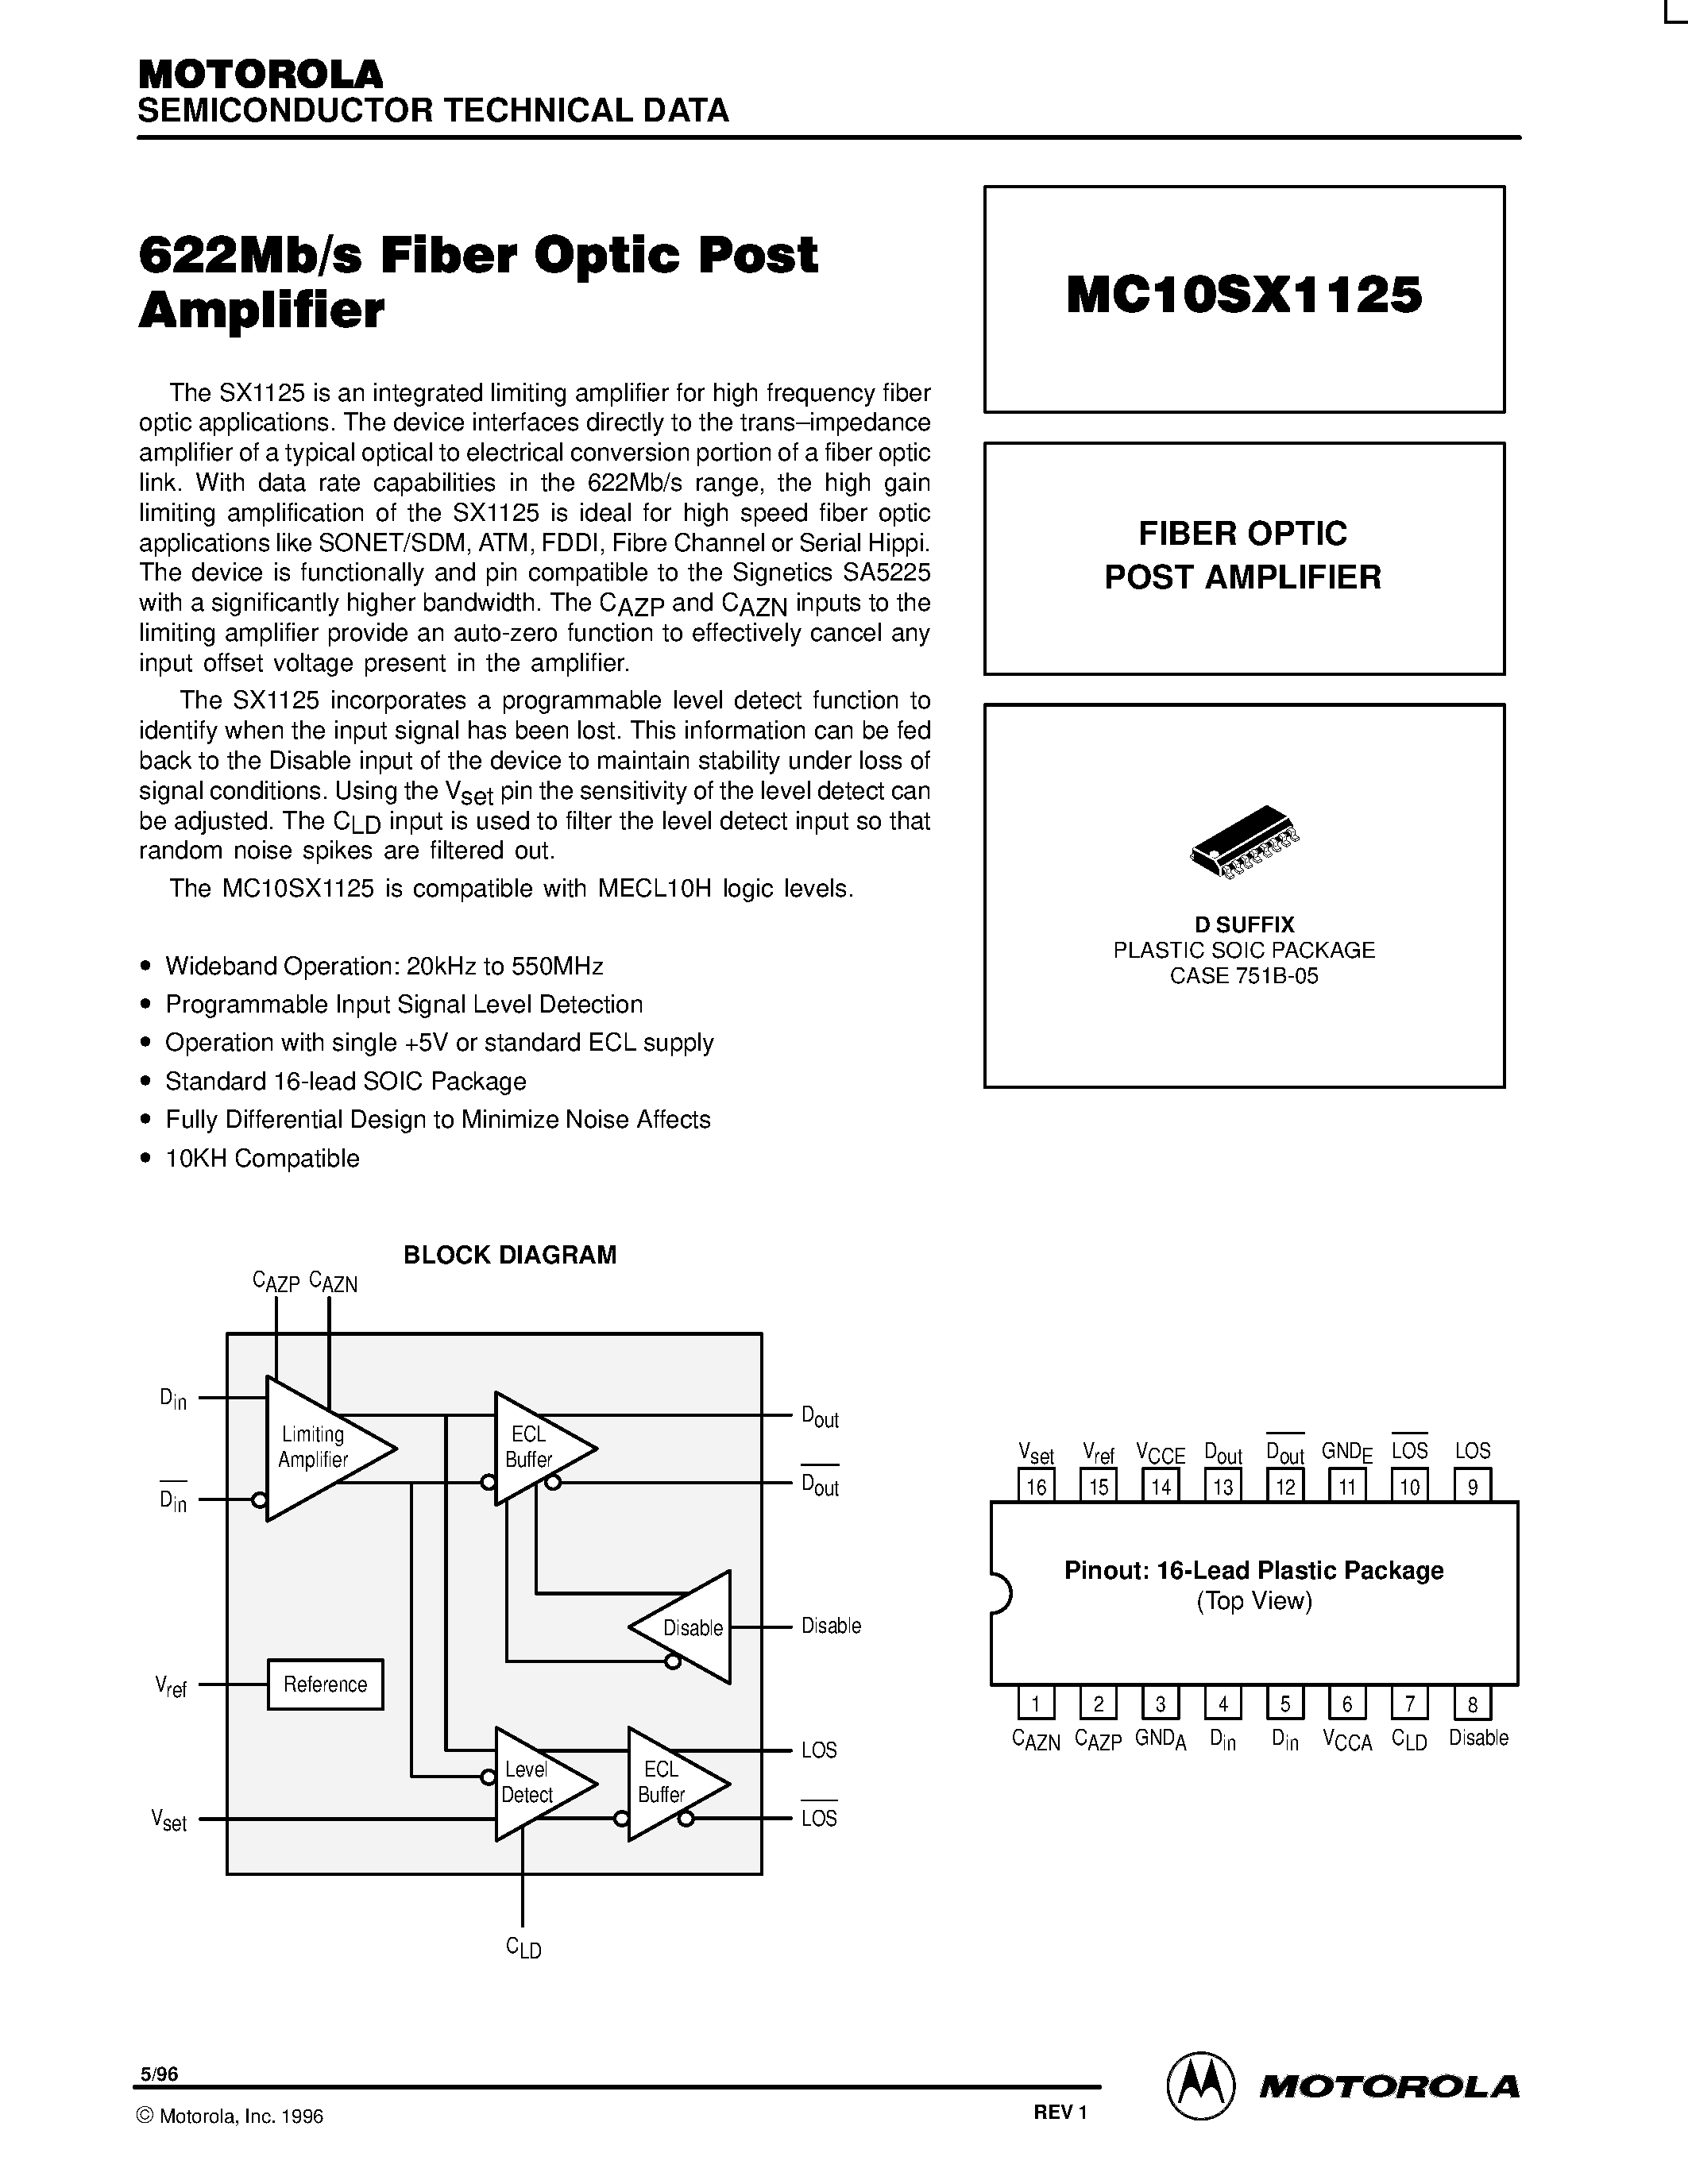 Даташит MC10SX1125 - FIBER OPTIC POST AMPLIFIER страница 1